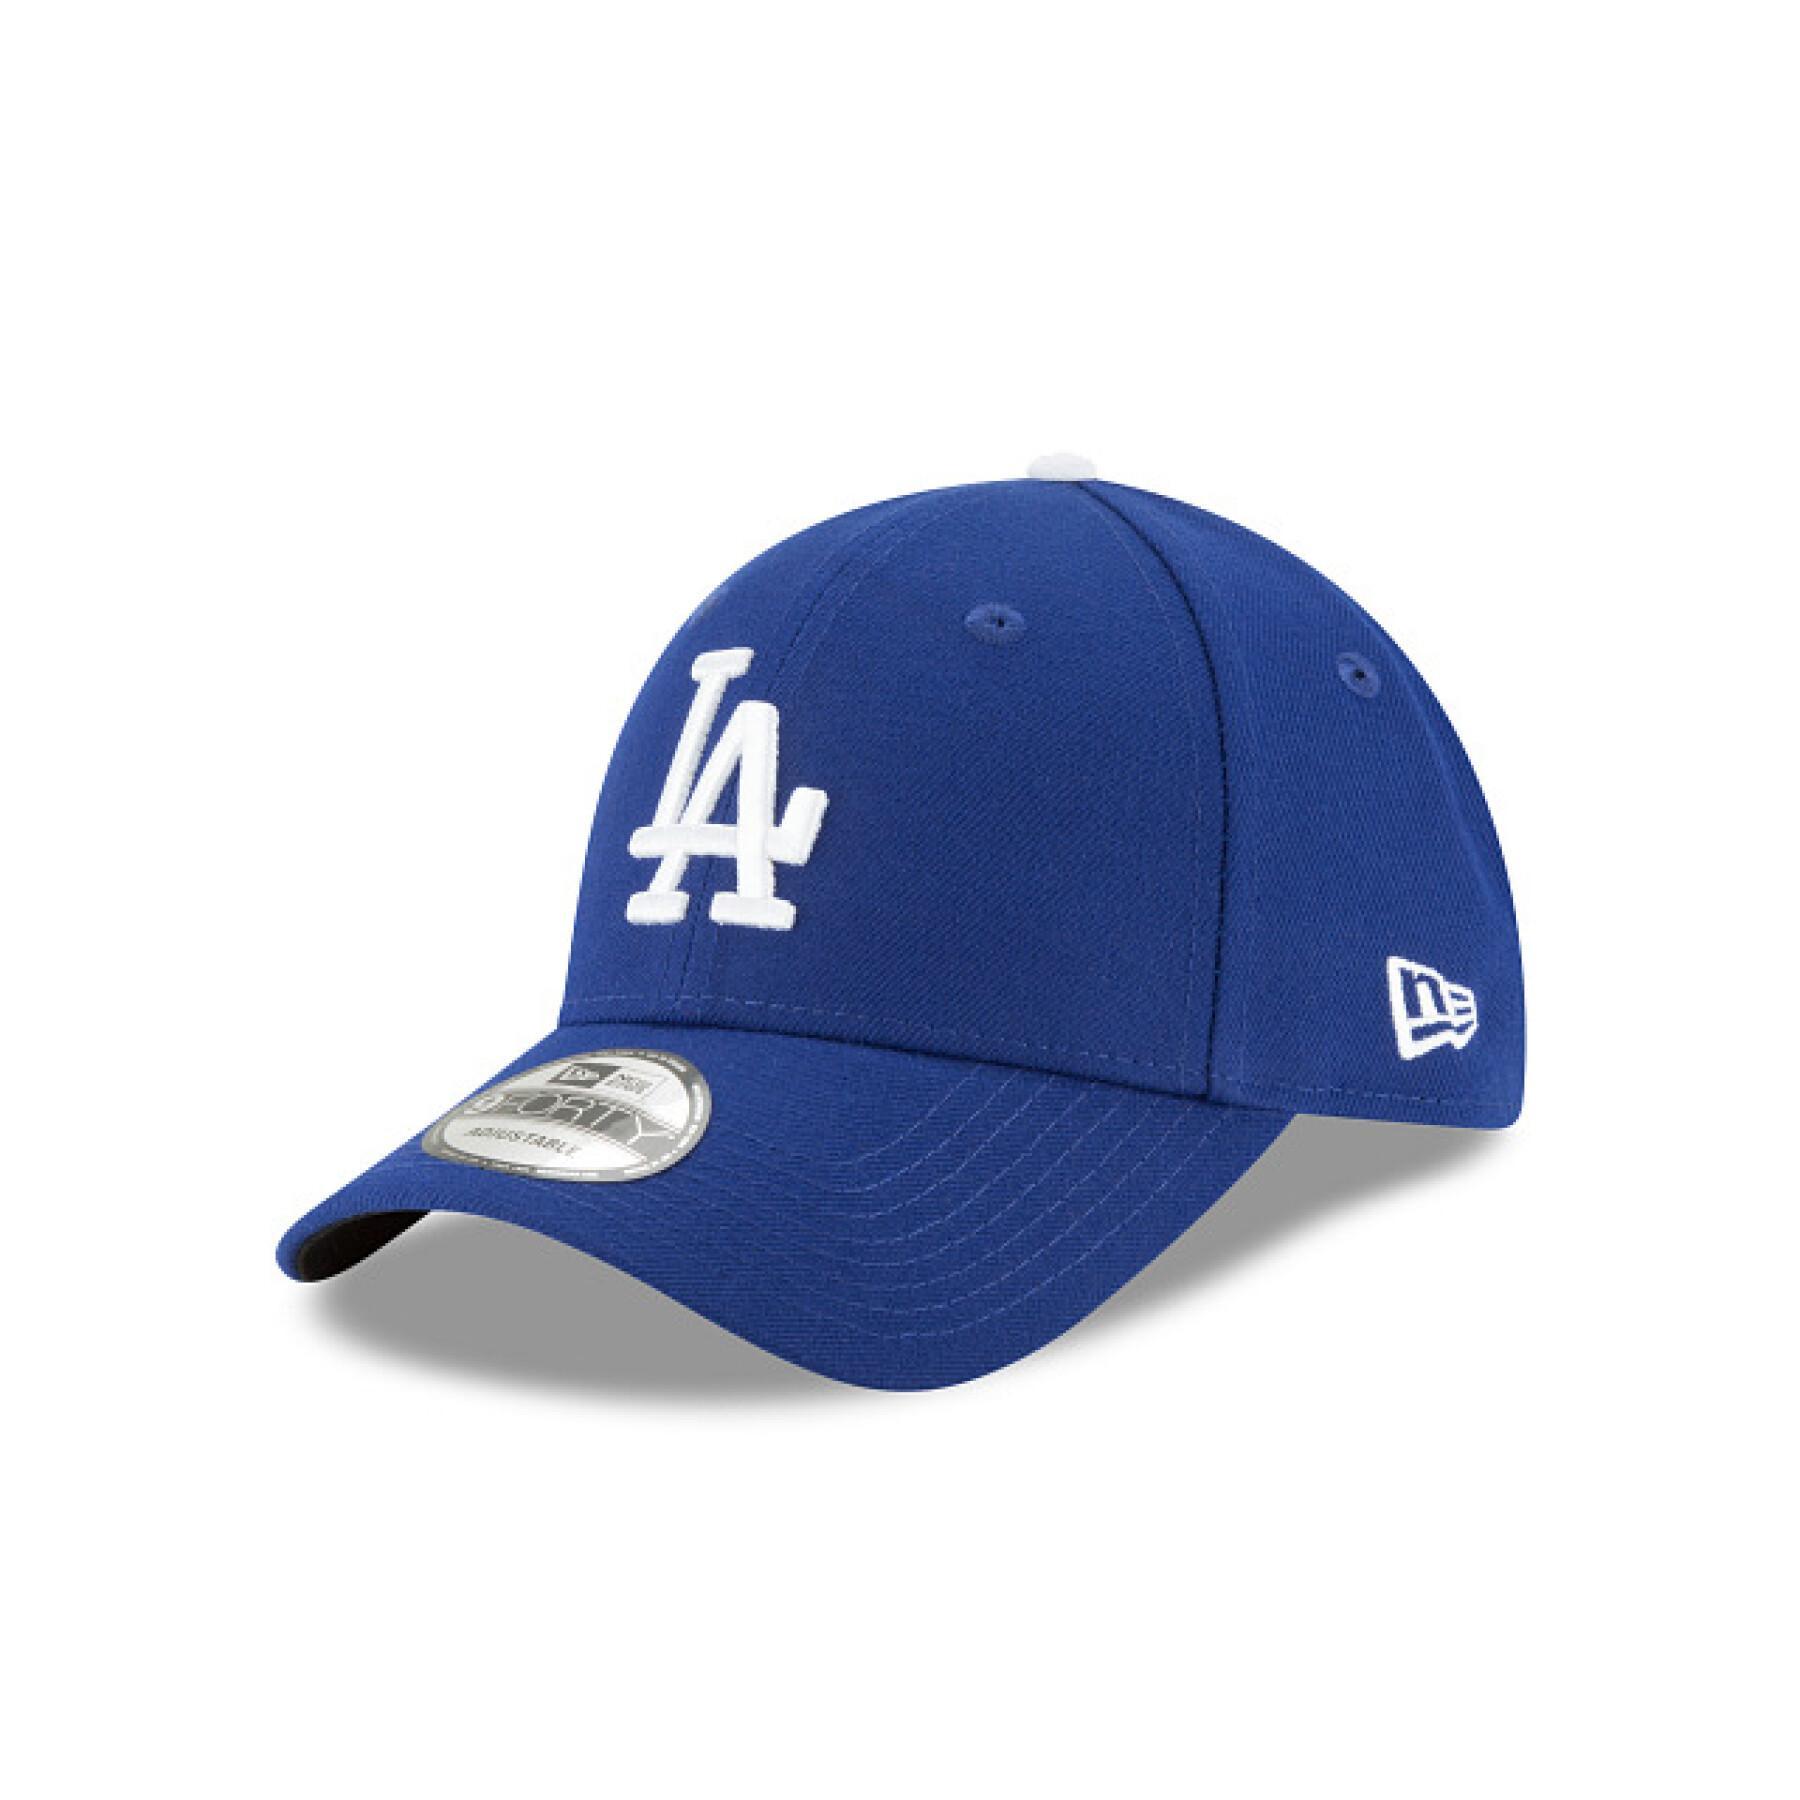 Cap Los Angeles Dodgers